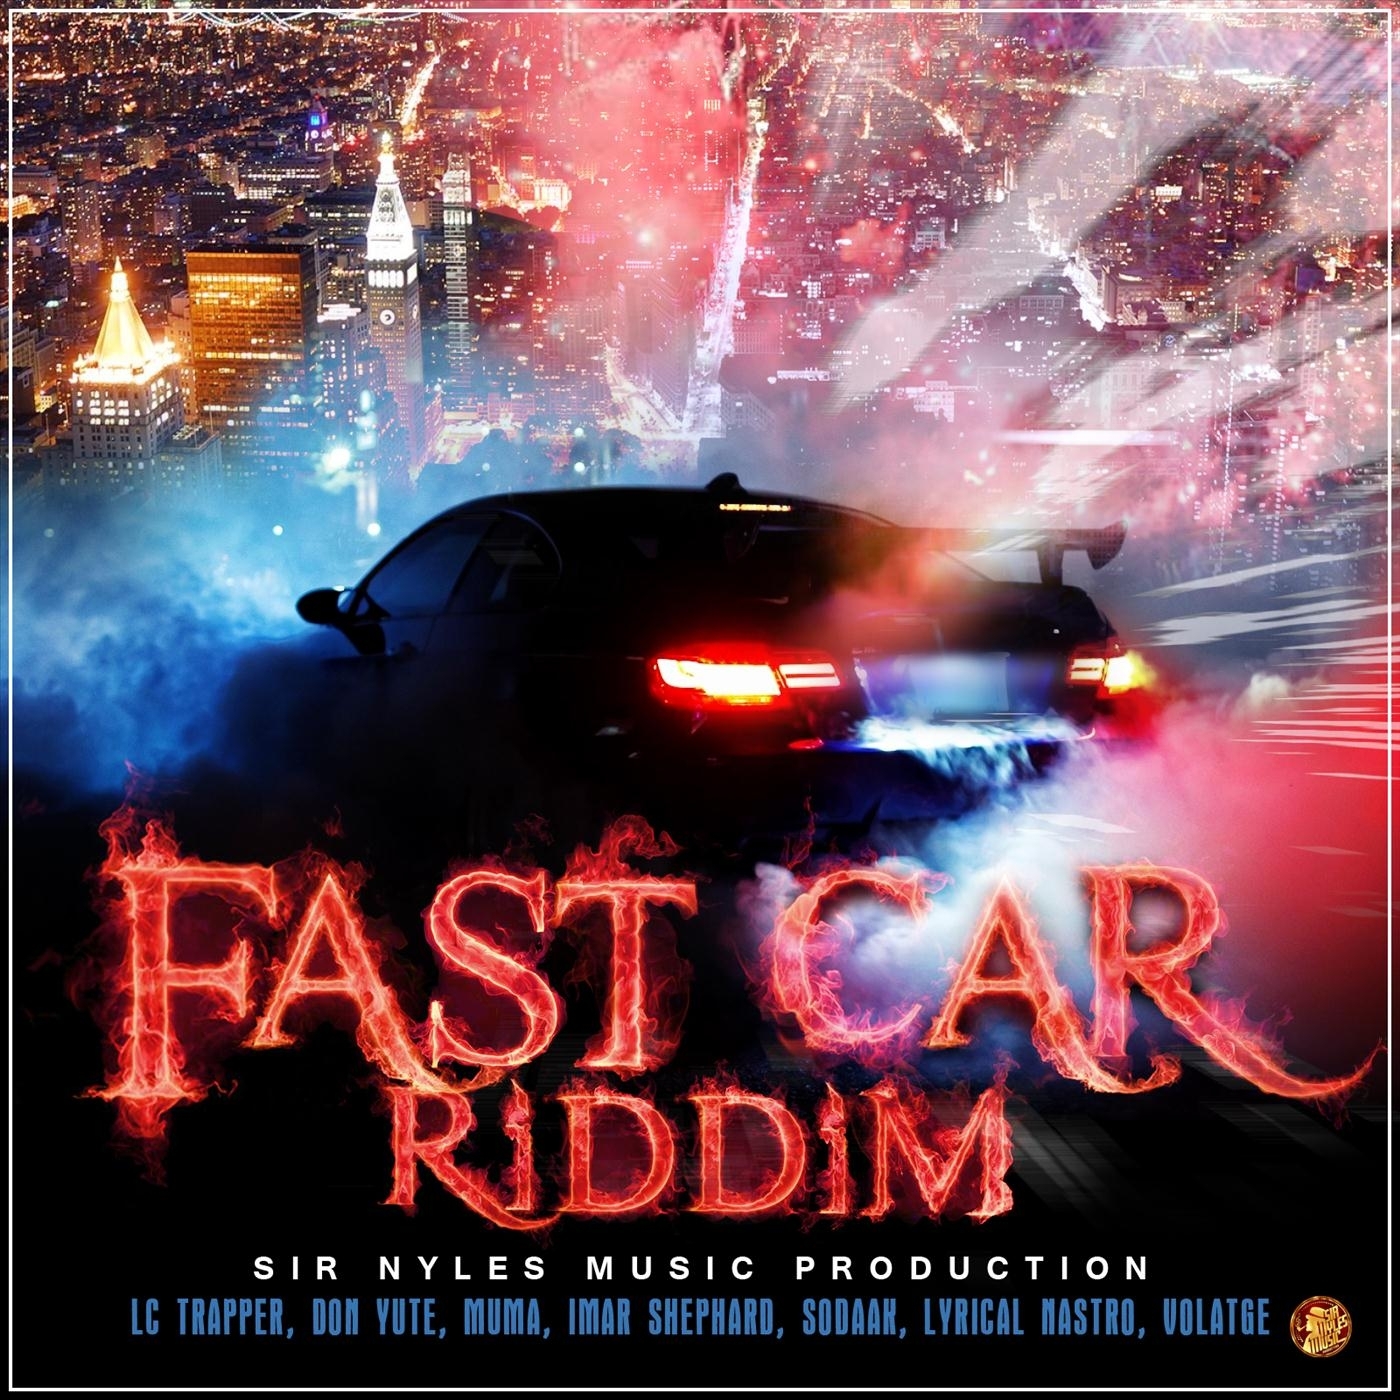 Fast Car Riddim